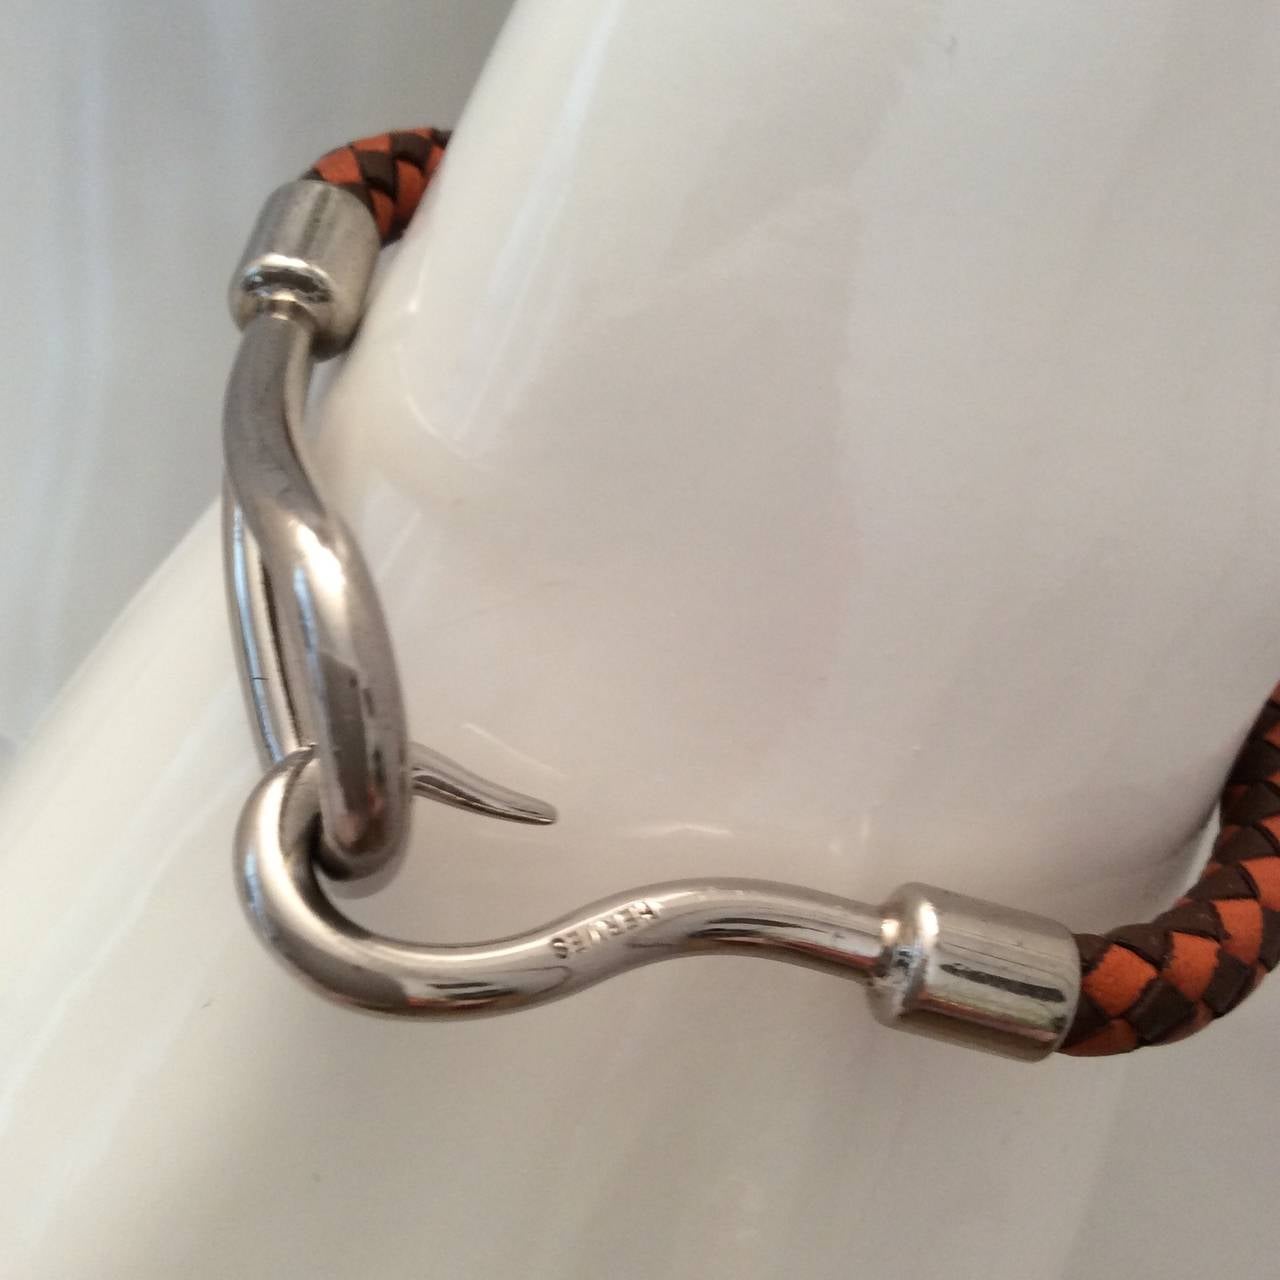 Hermes Bracelet Leather - Braided Orange and Brown 2